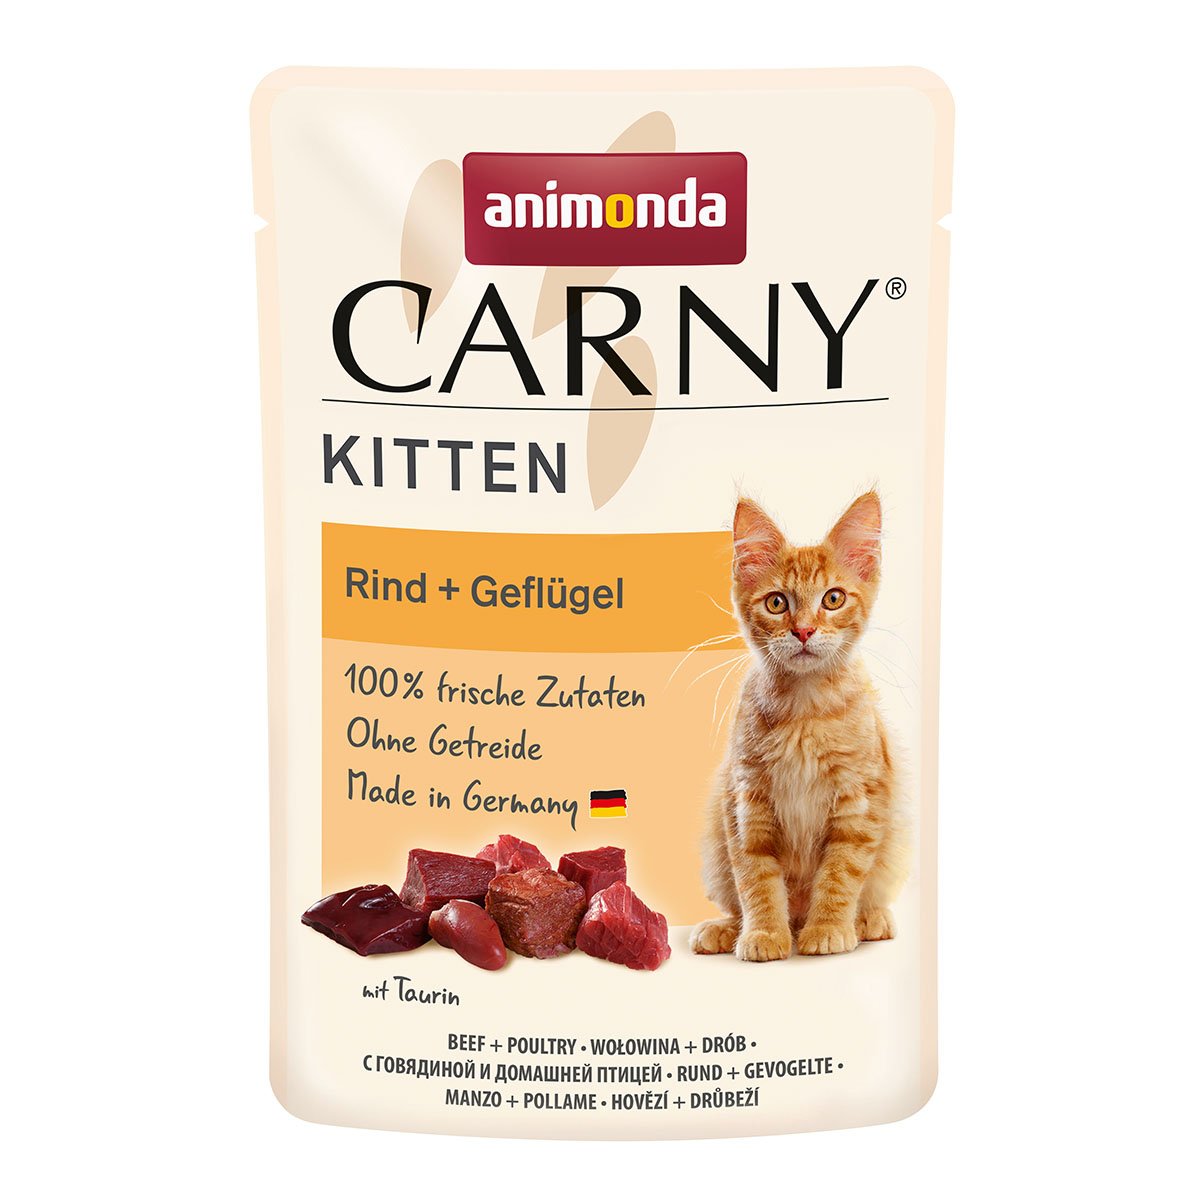 animonda Carny Kitten Rind + Geflügel 24x85g von animonda Carny